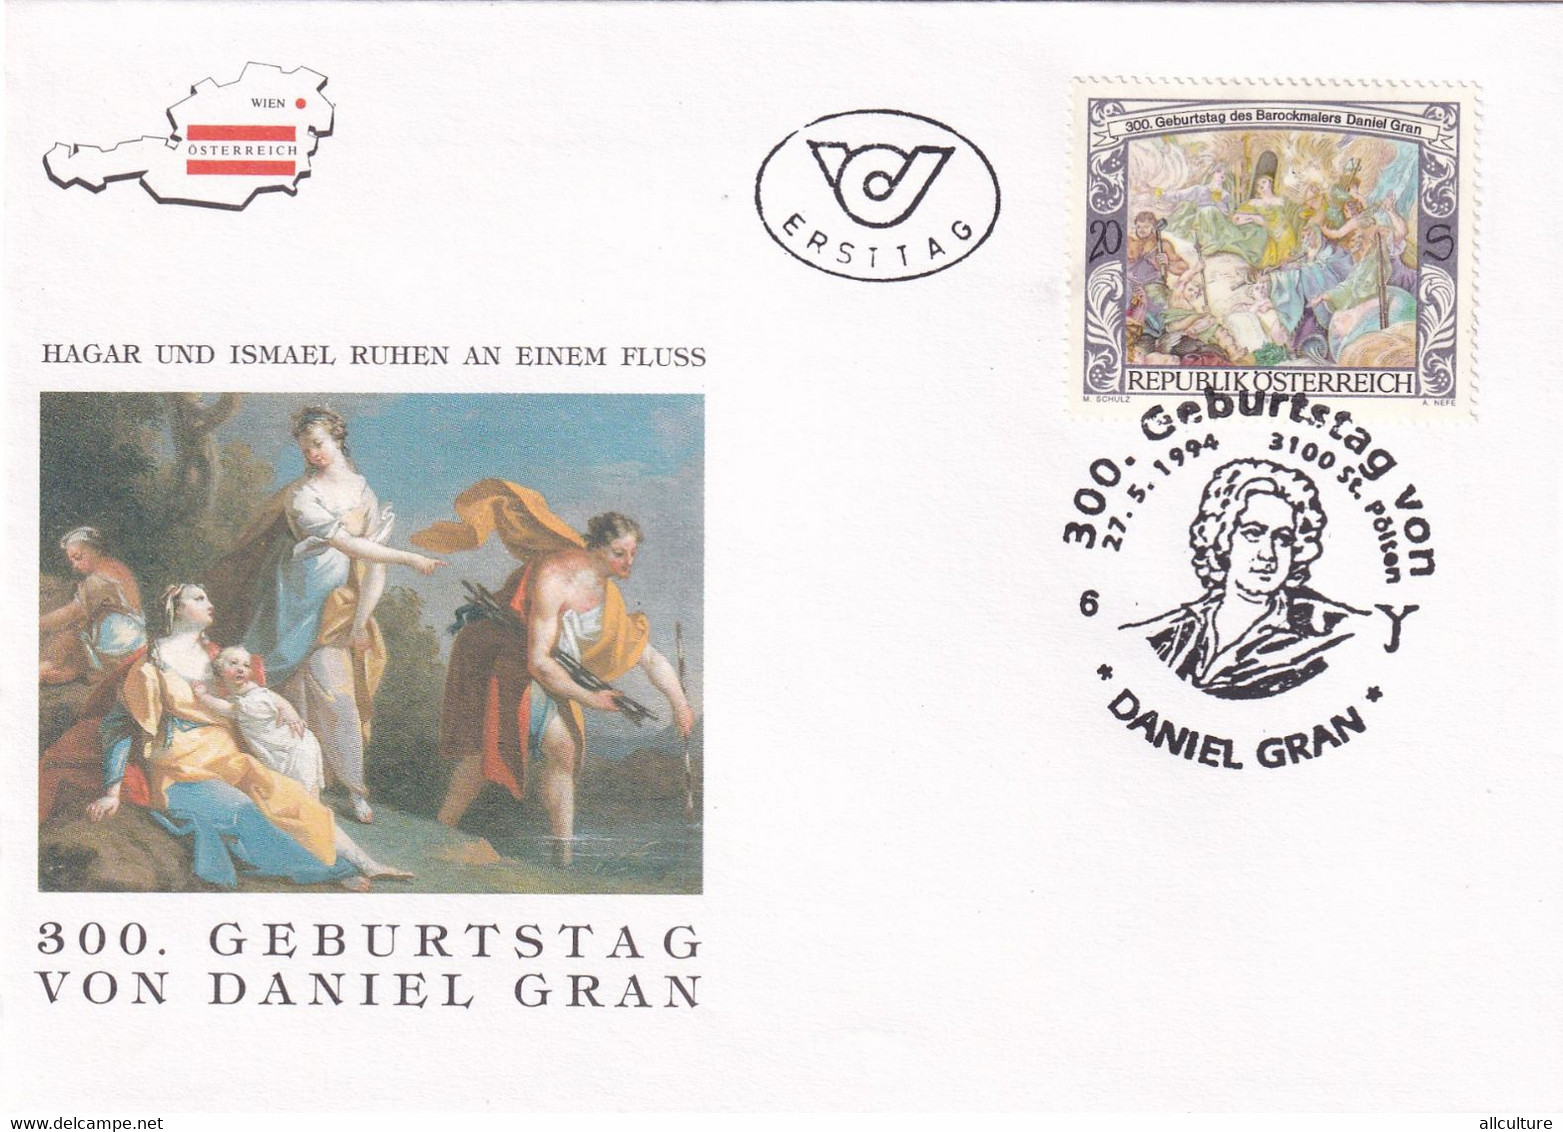 A8393- ERSTTAG DANIEL GRAN PAINTINGS, WEIN 1994 REPUBLIC OSTERREICH AUSTRIA USED STAMP ON COVER - Brieven En Documenten